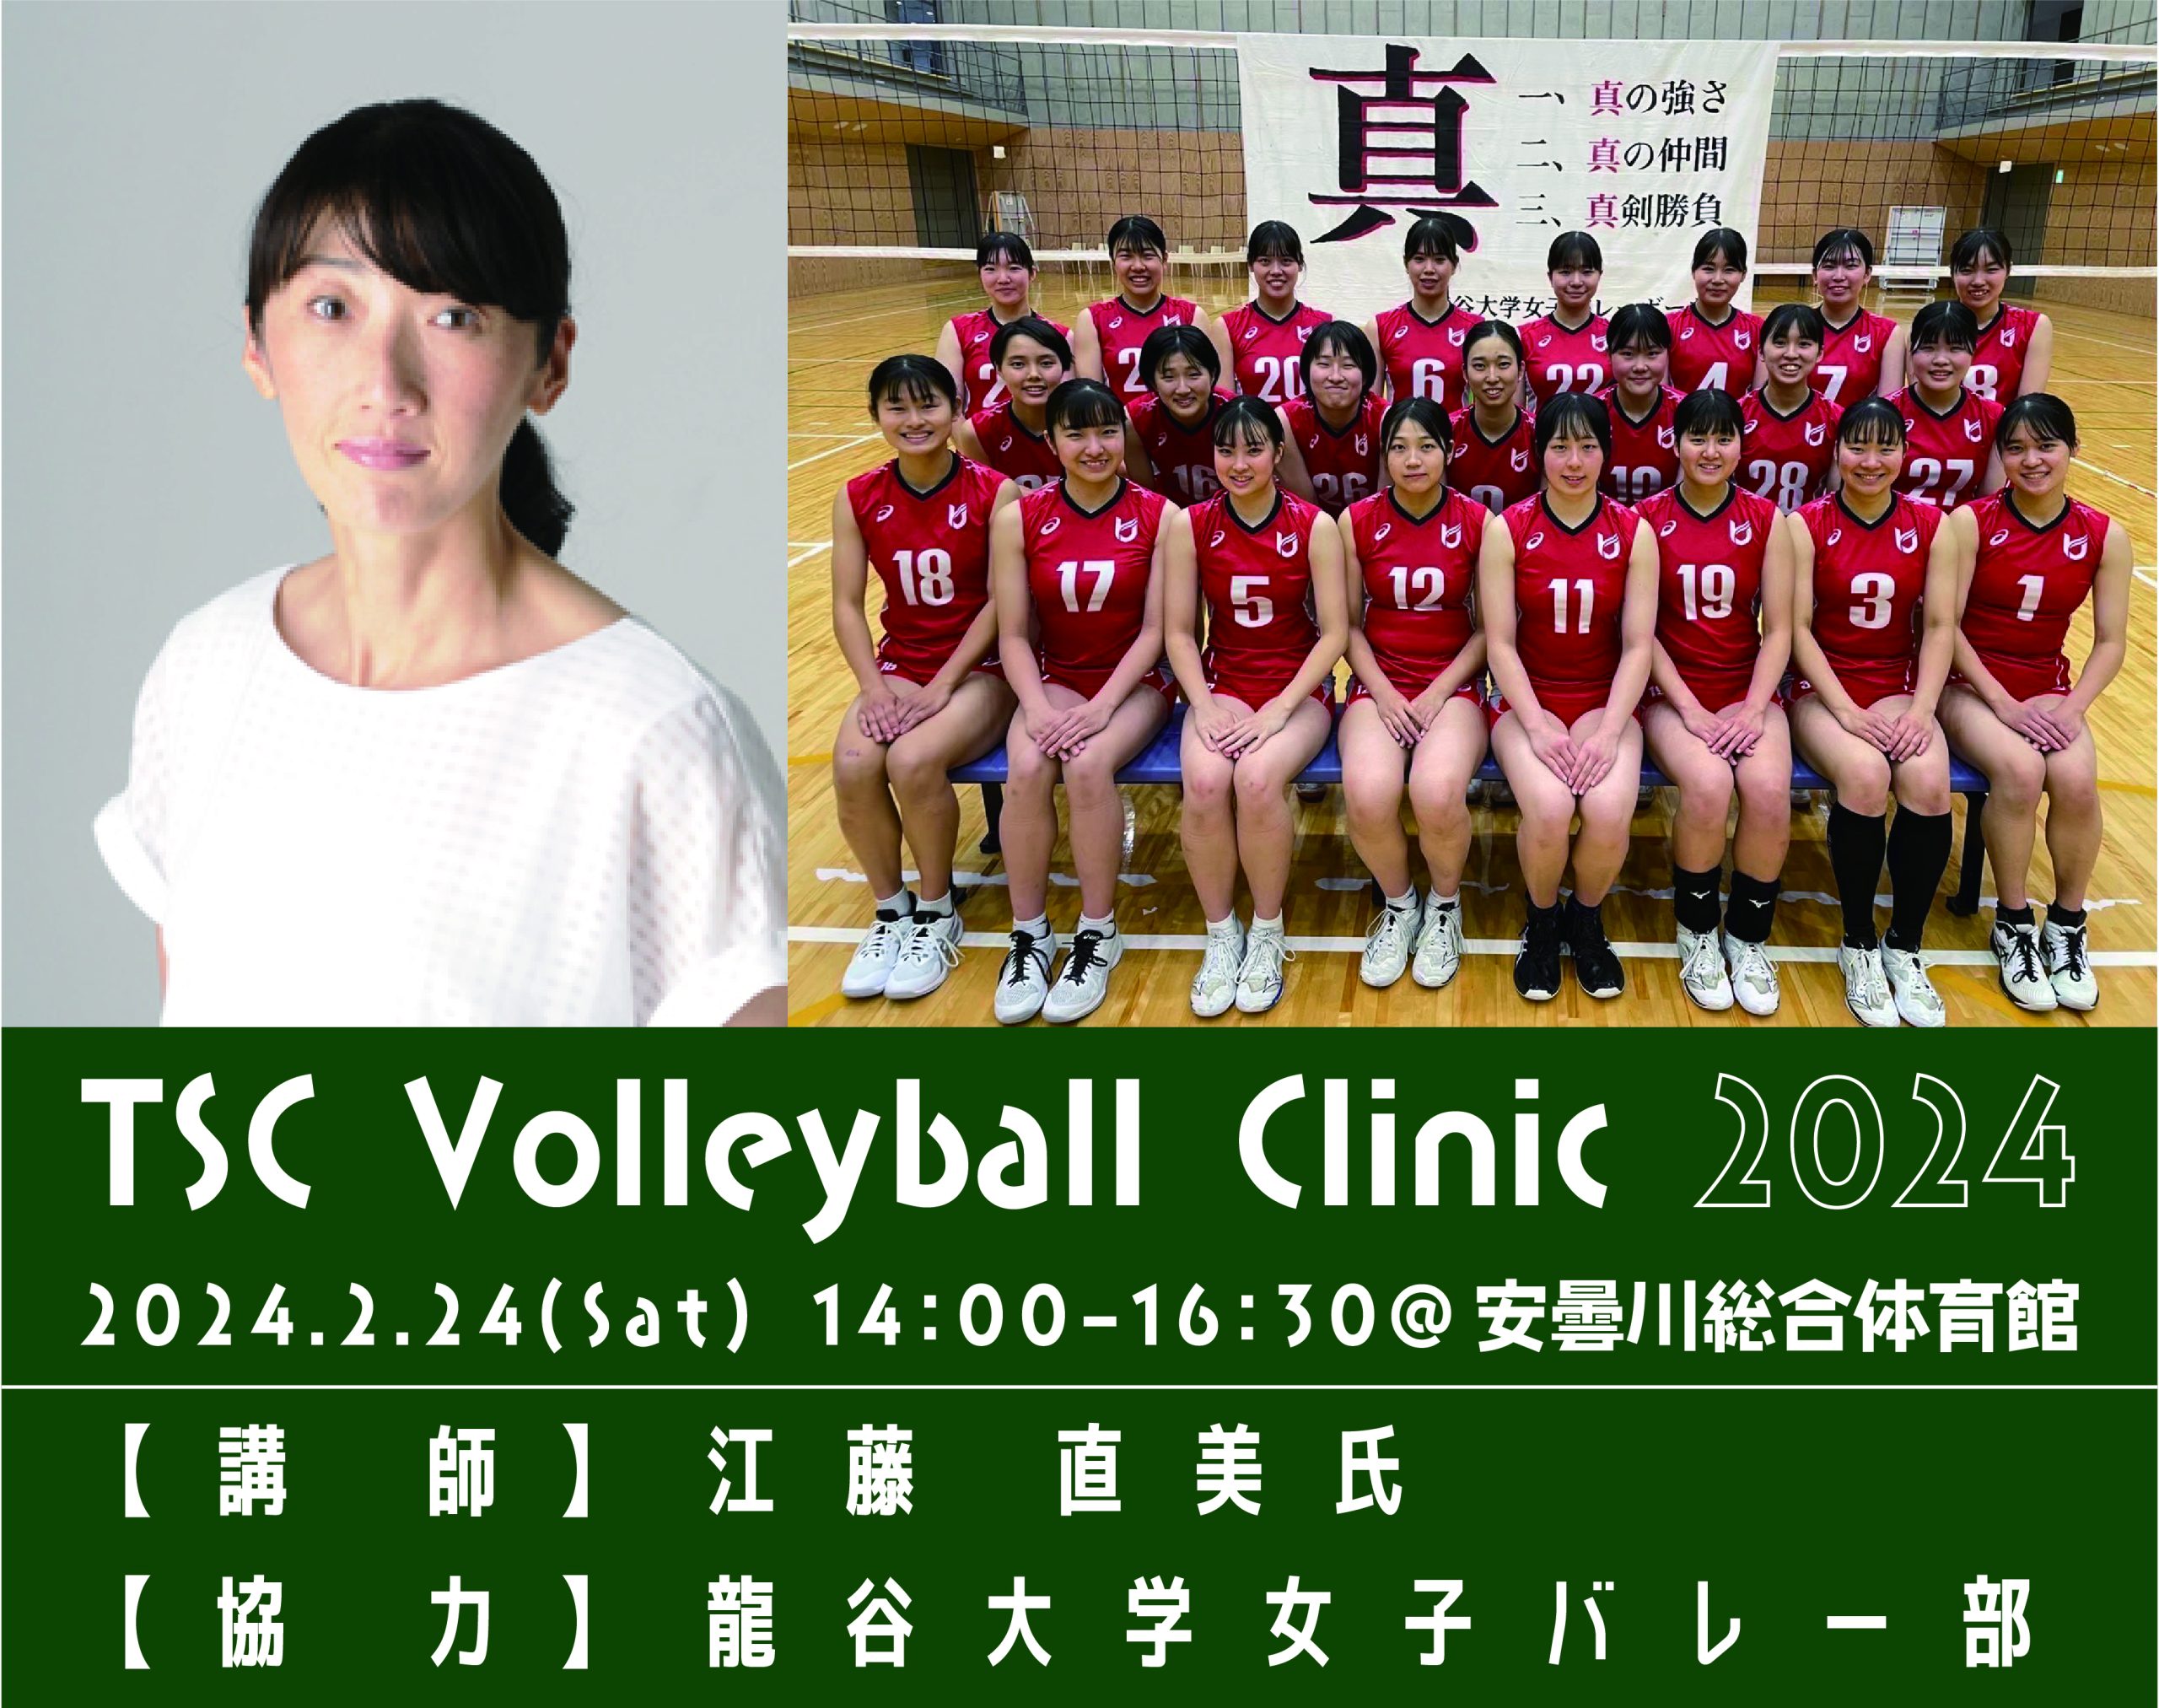 【バレーボール元全日本女子代表】江藤 直美氏 TSC Volleyball Clinic 2024